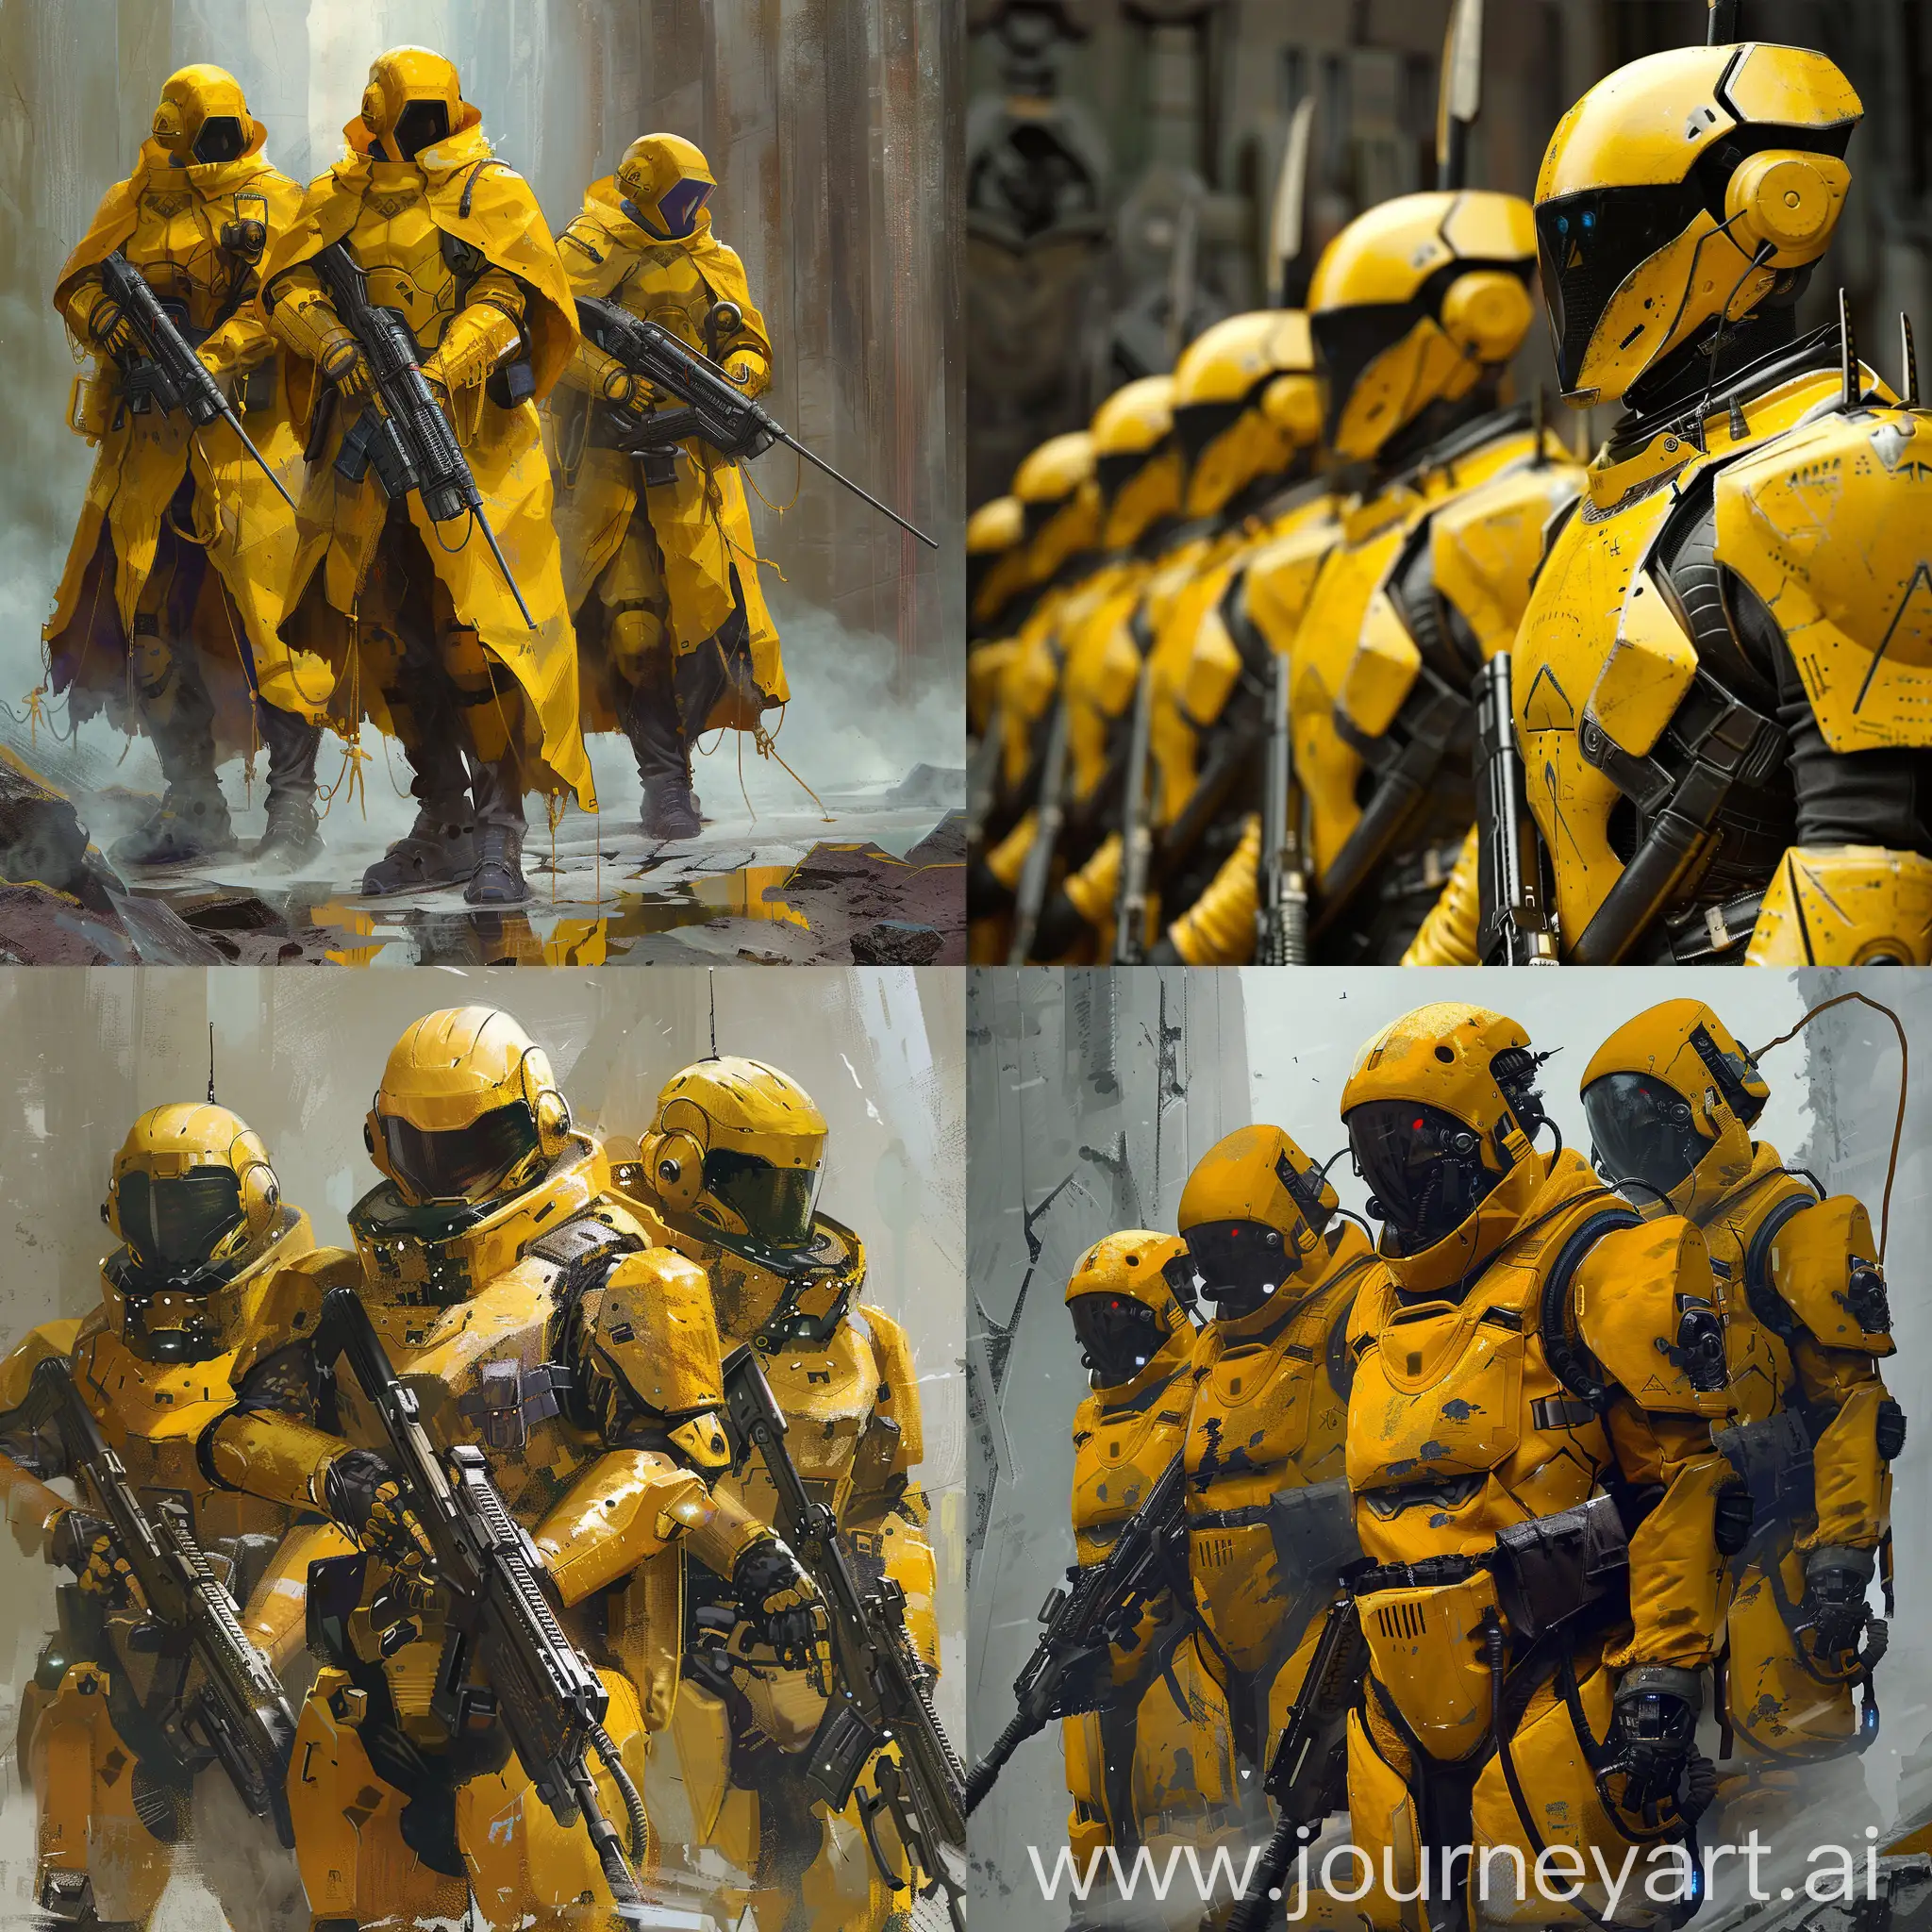 Futuristic-Soldiers-in-Yellow-Armor